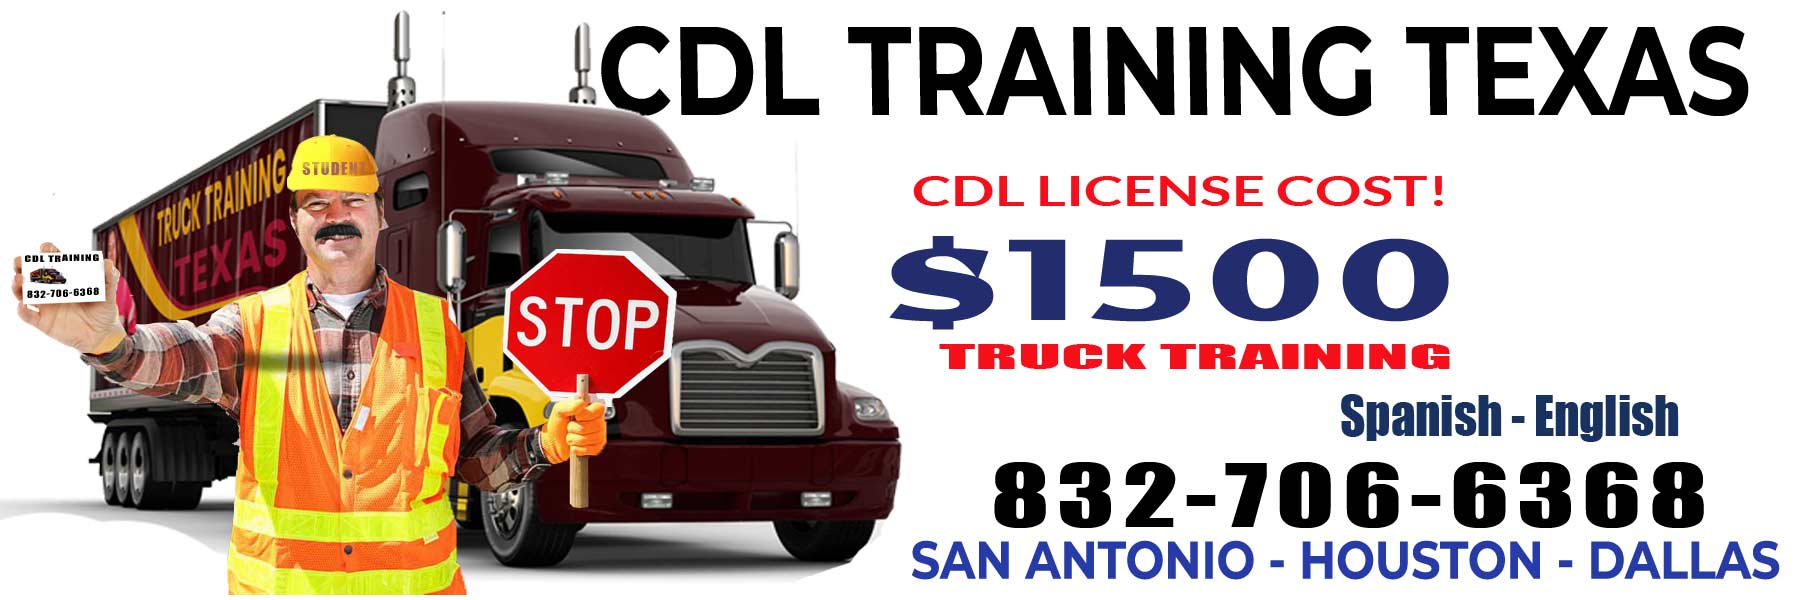 CDL School MIDLAND TX, Truck Driving Training Pearland, TX $1500